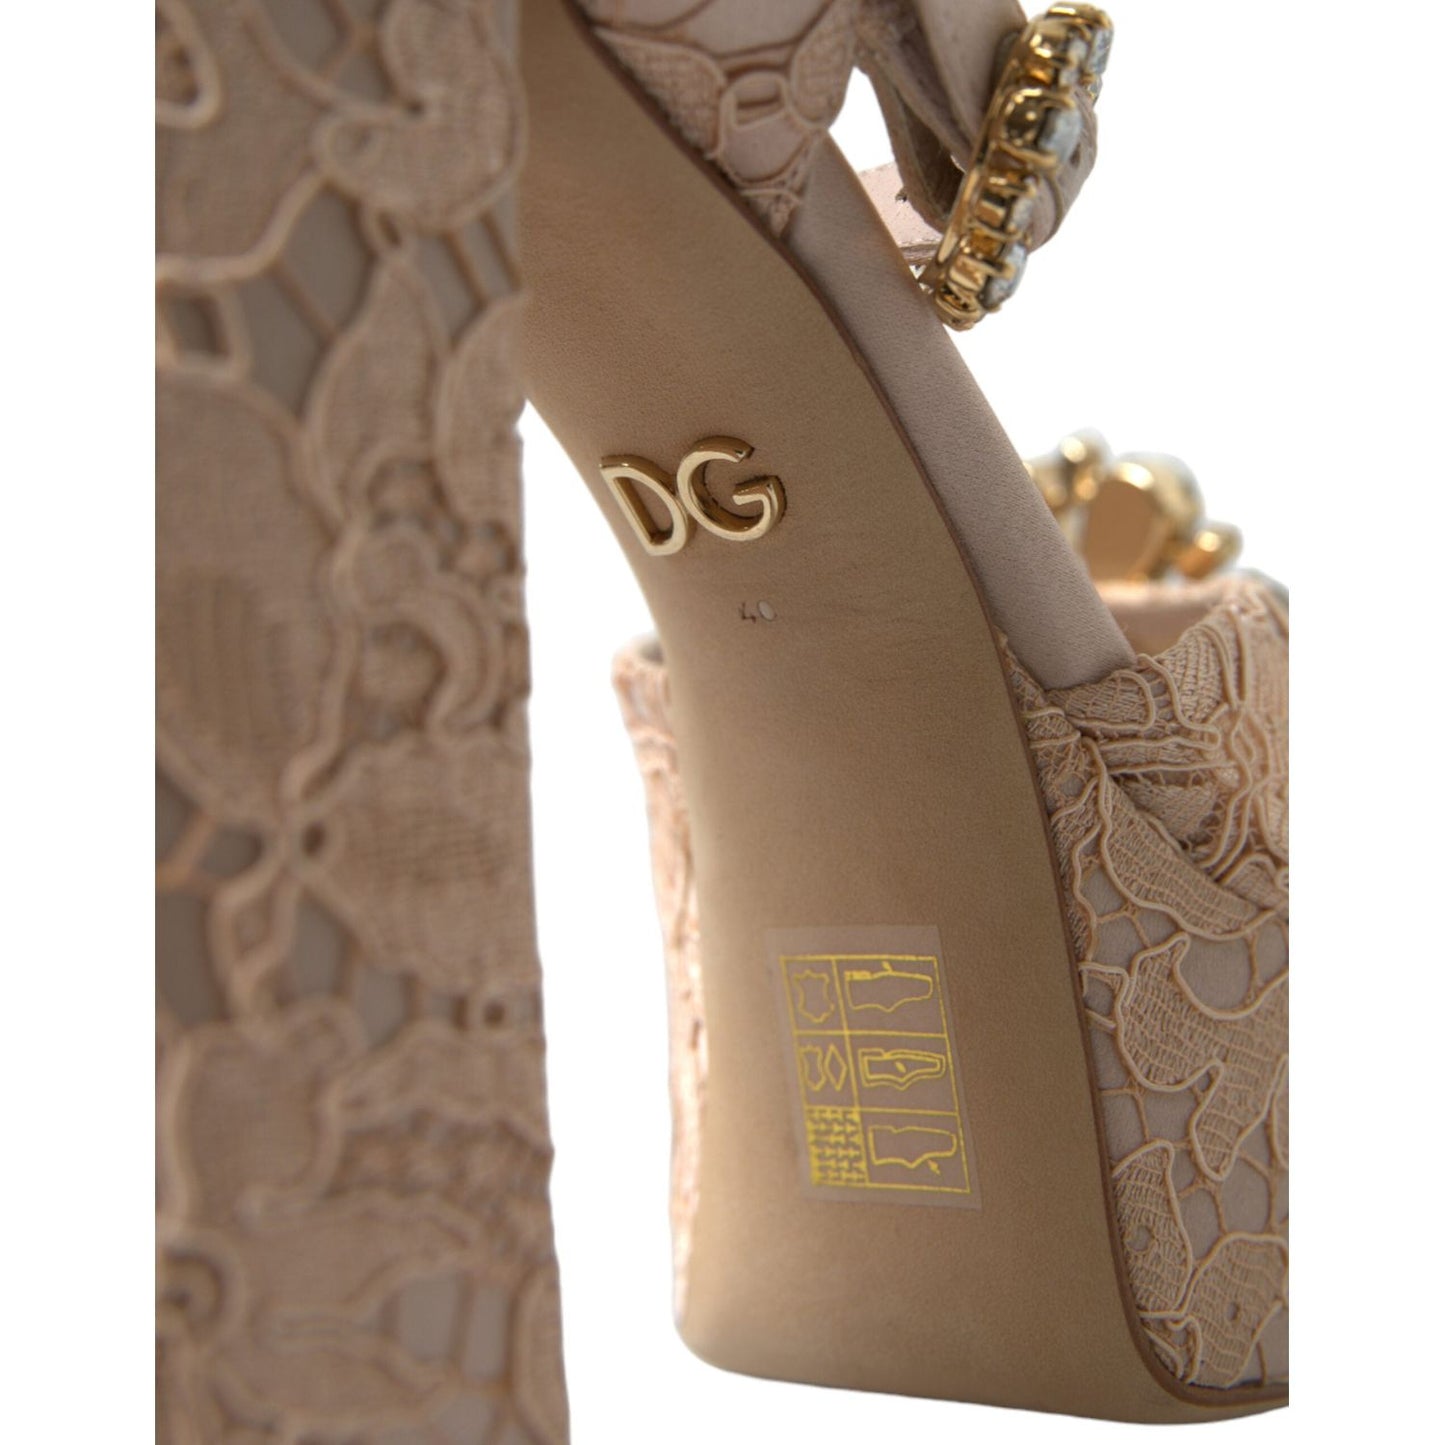 Dolce & Gabbana Chic Light Pink Platform Heels with Lace Detail pink-lace-taormina-platform-sandals-shoes-1